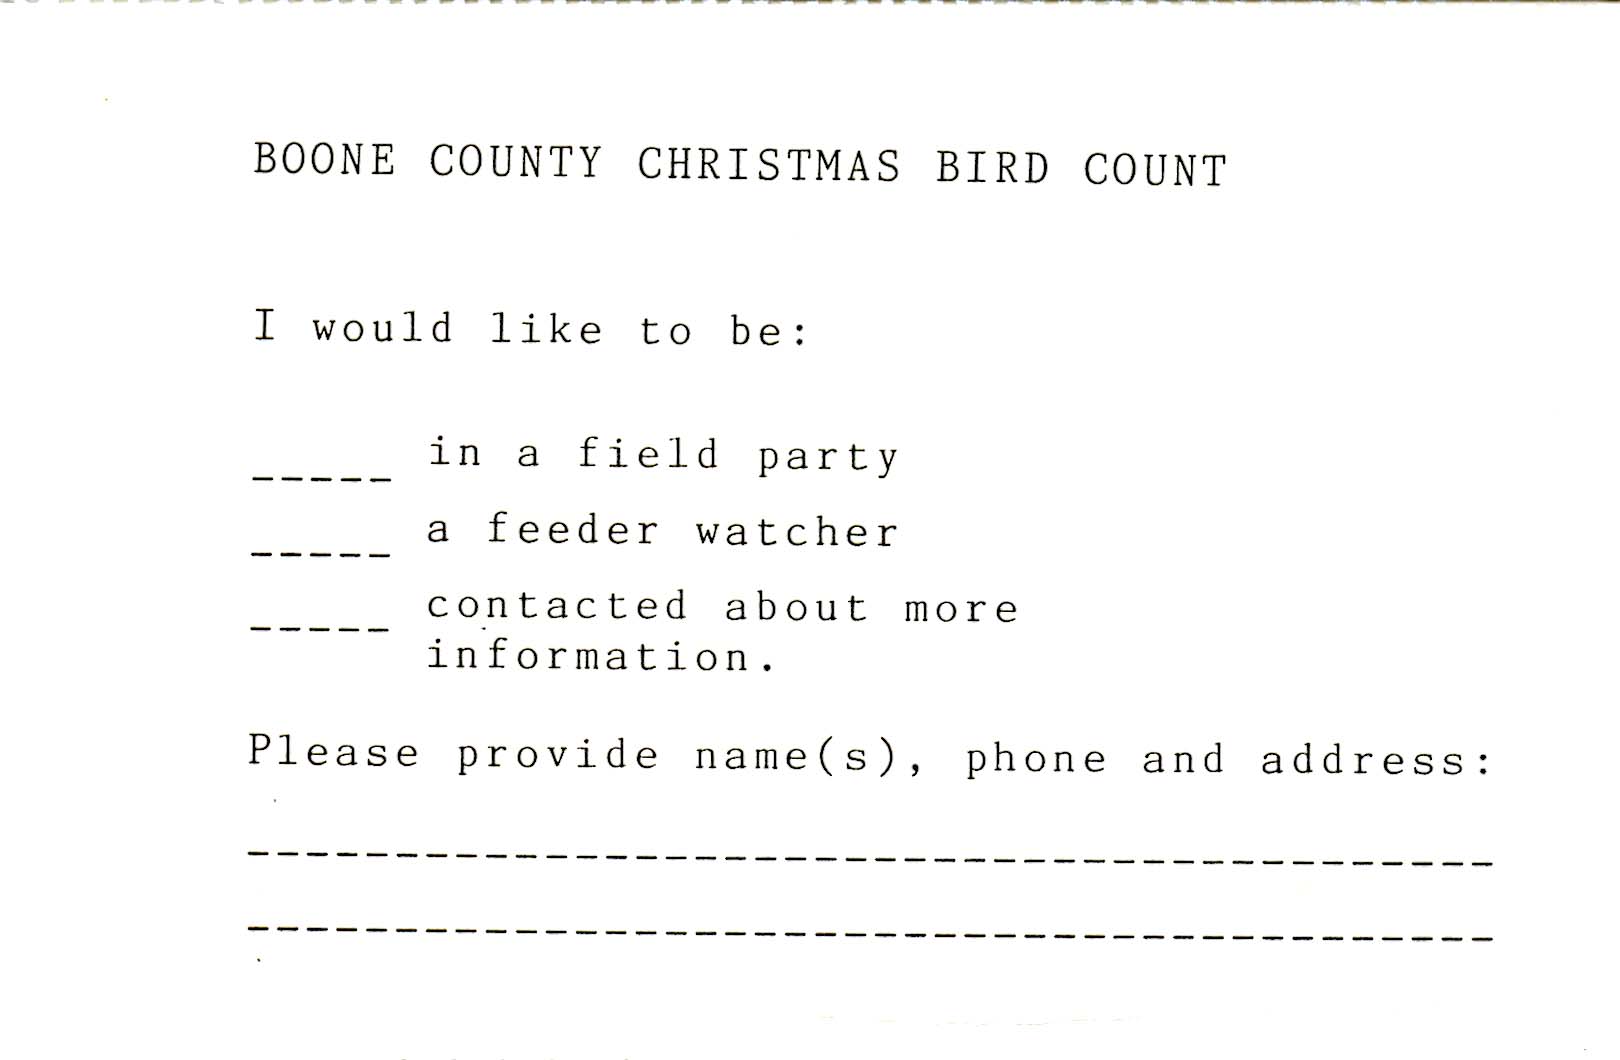 Erik Munson letter to the members of Big Bluestem Audubon Society regarding the Boone County Christmas Bird Count